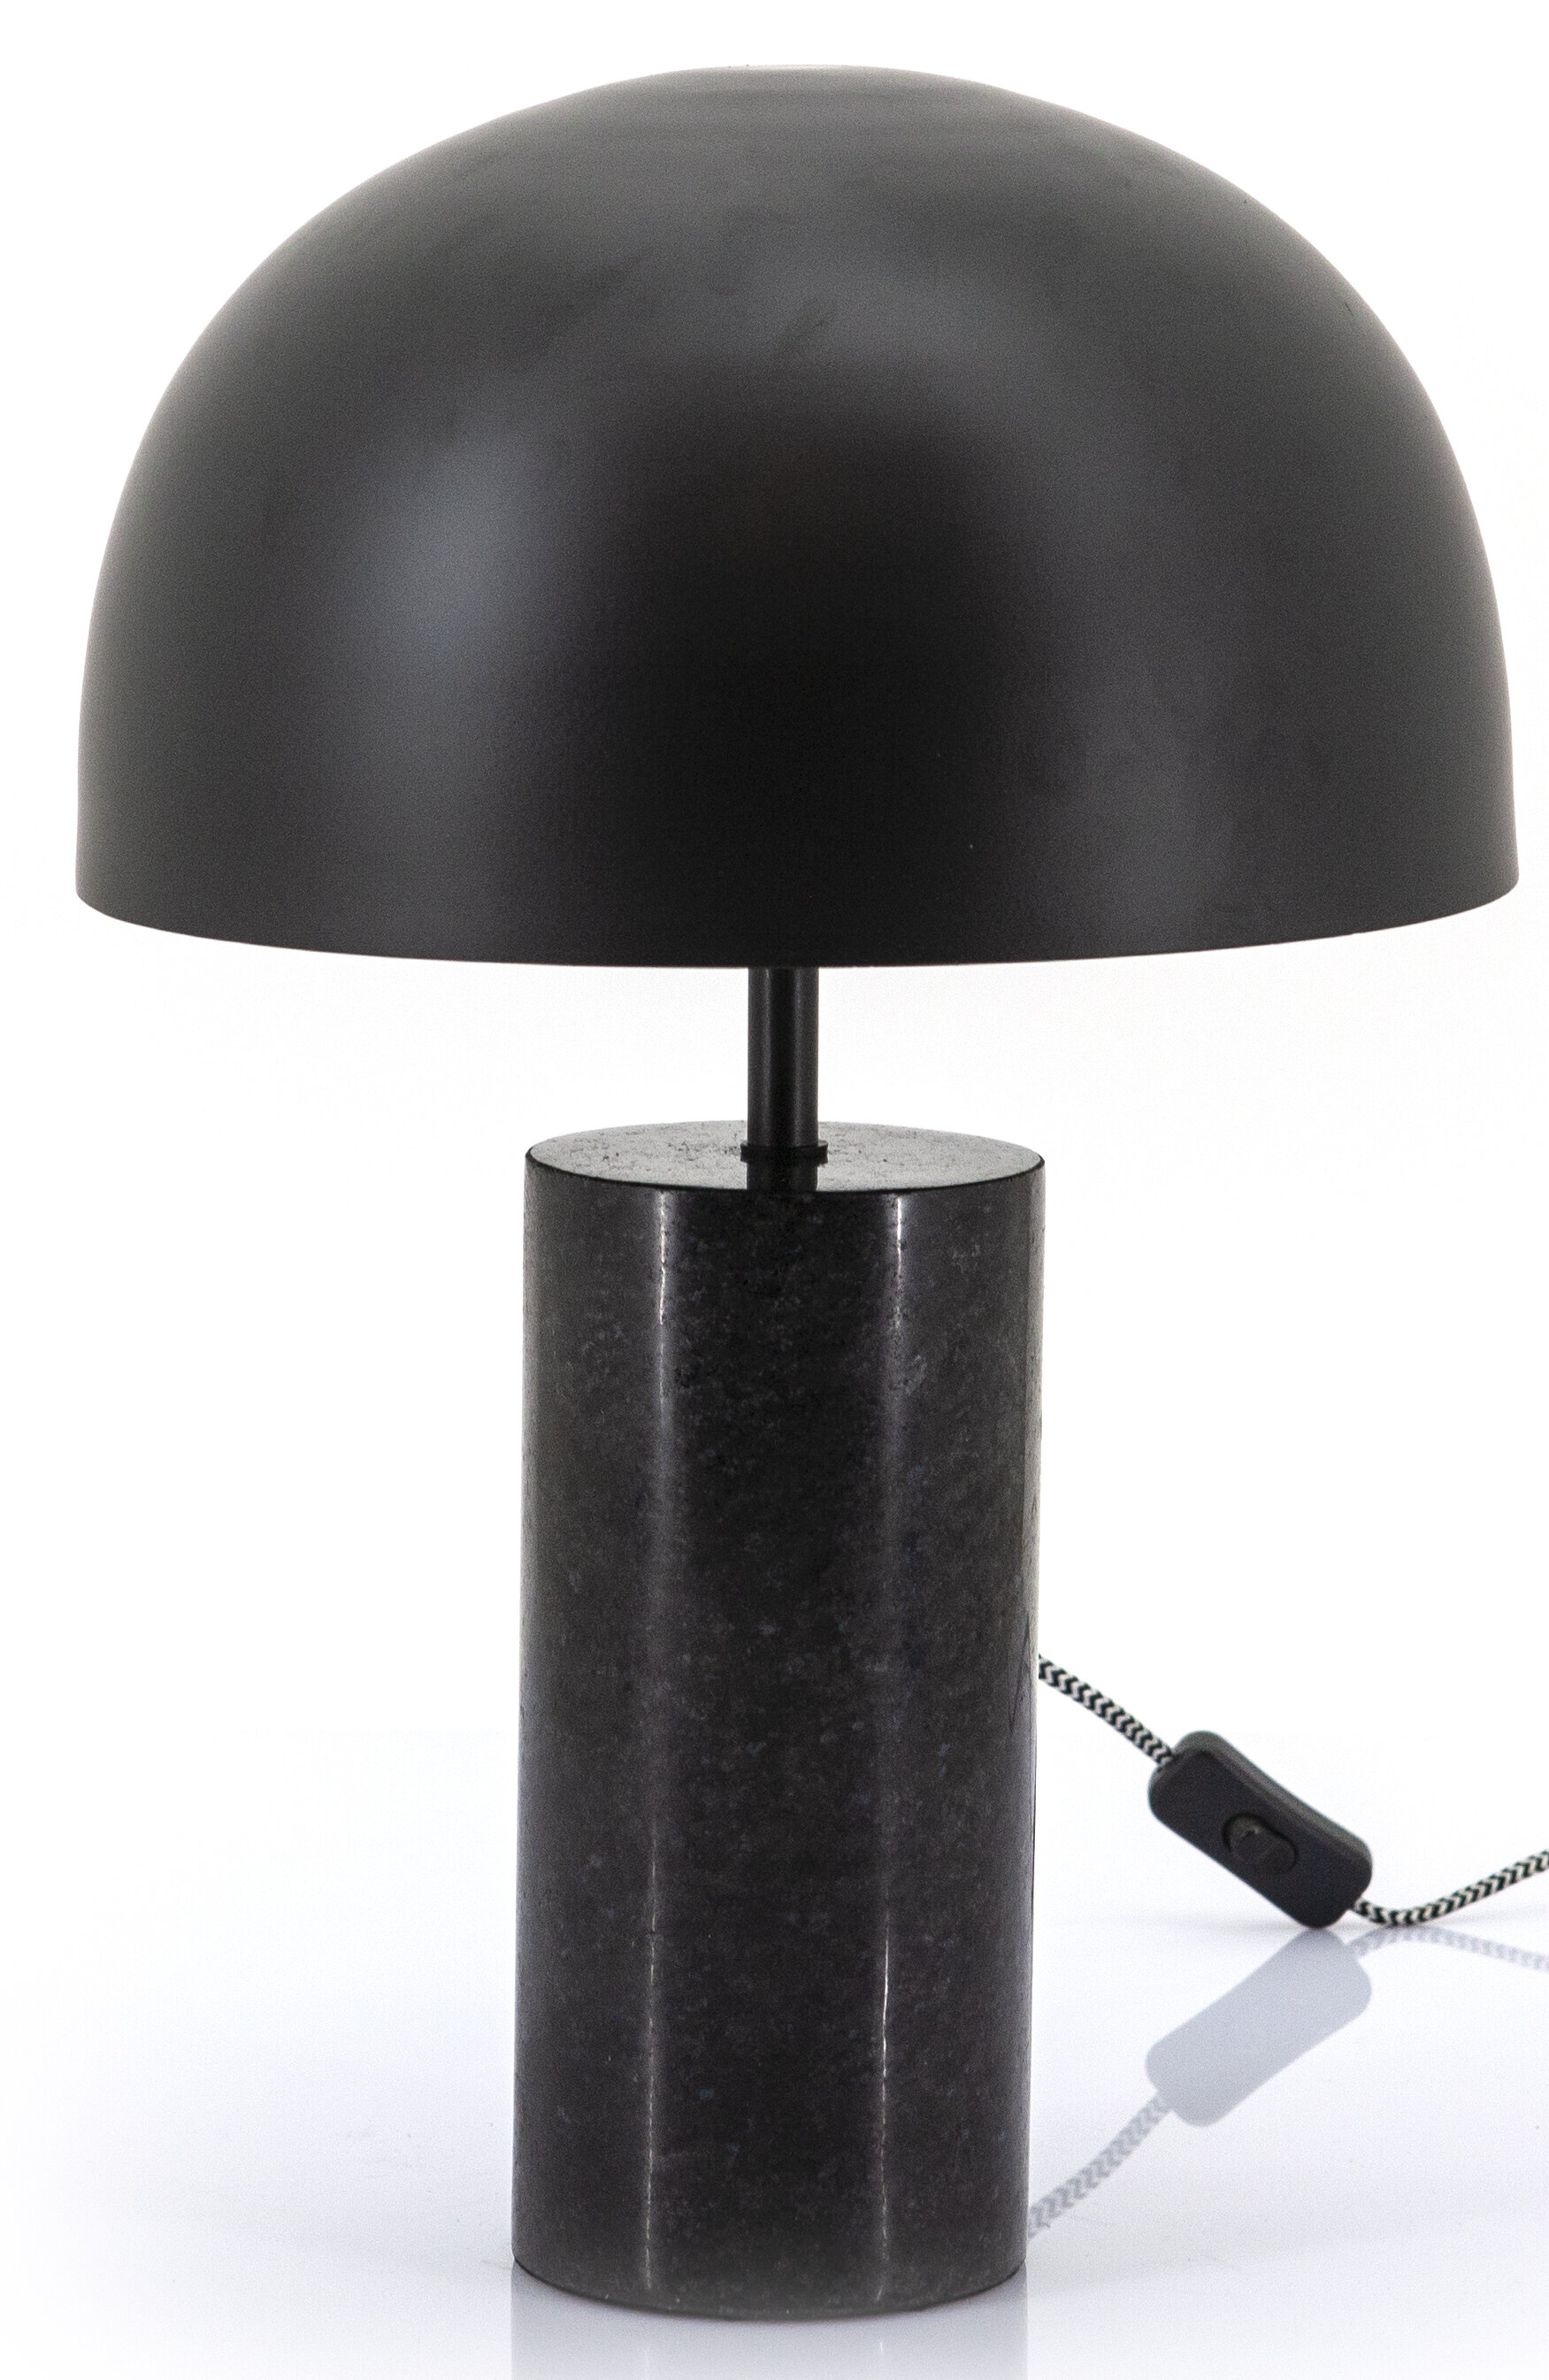 metal dome table lamp